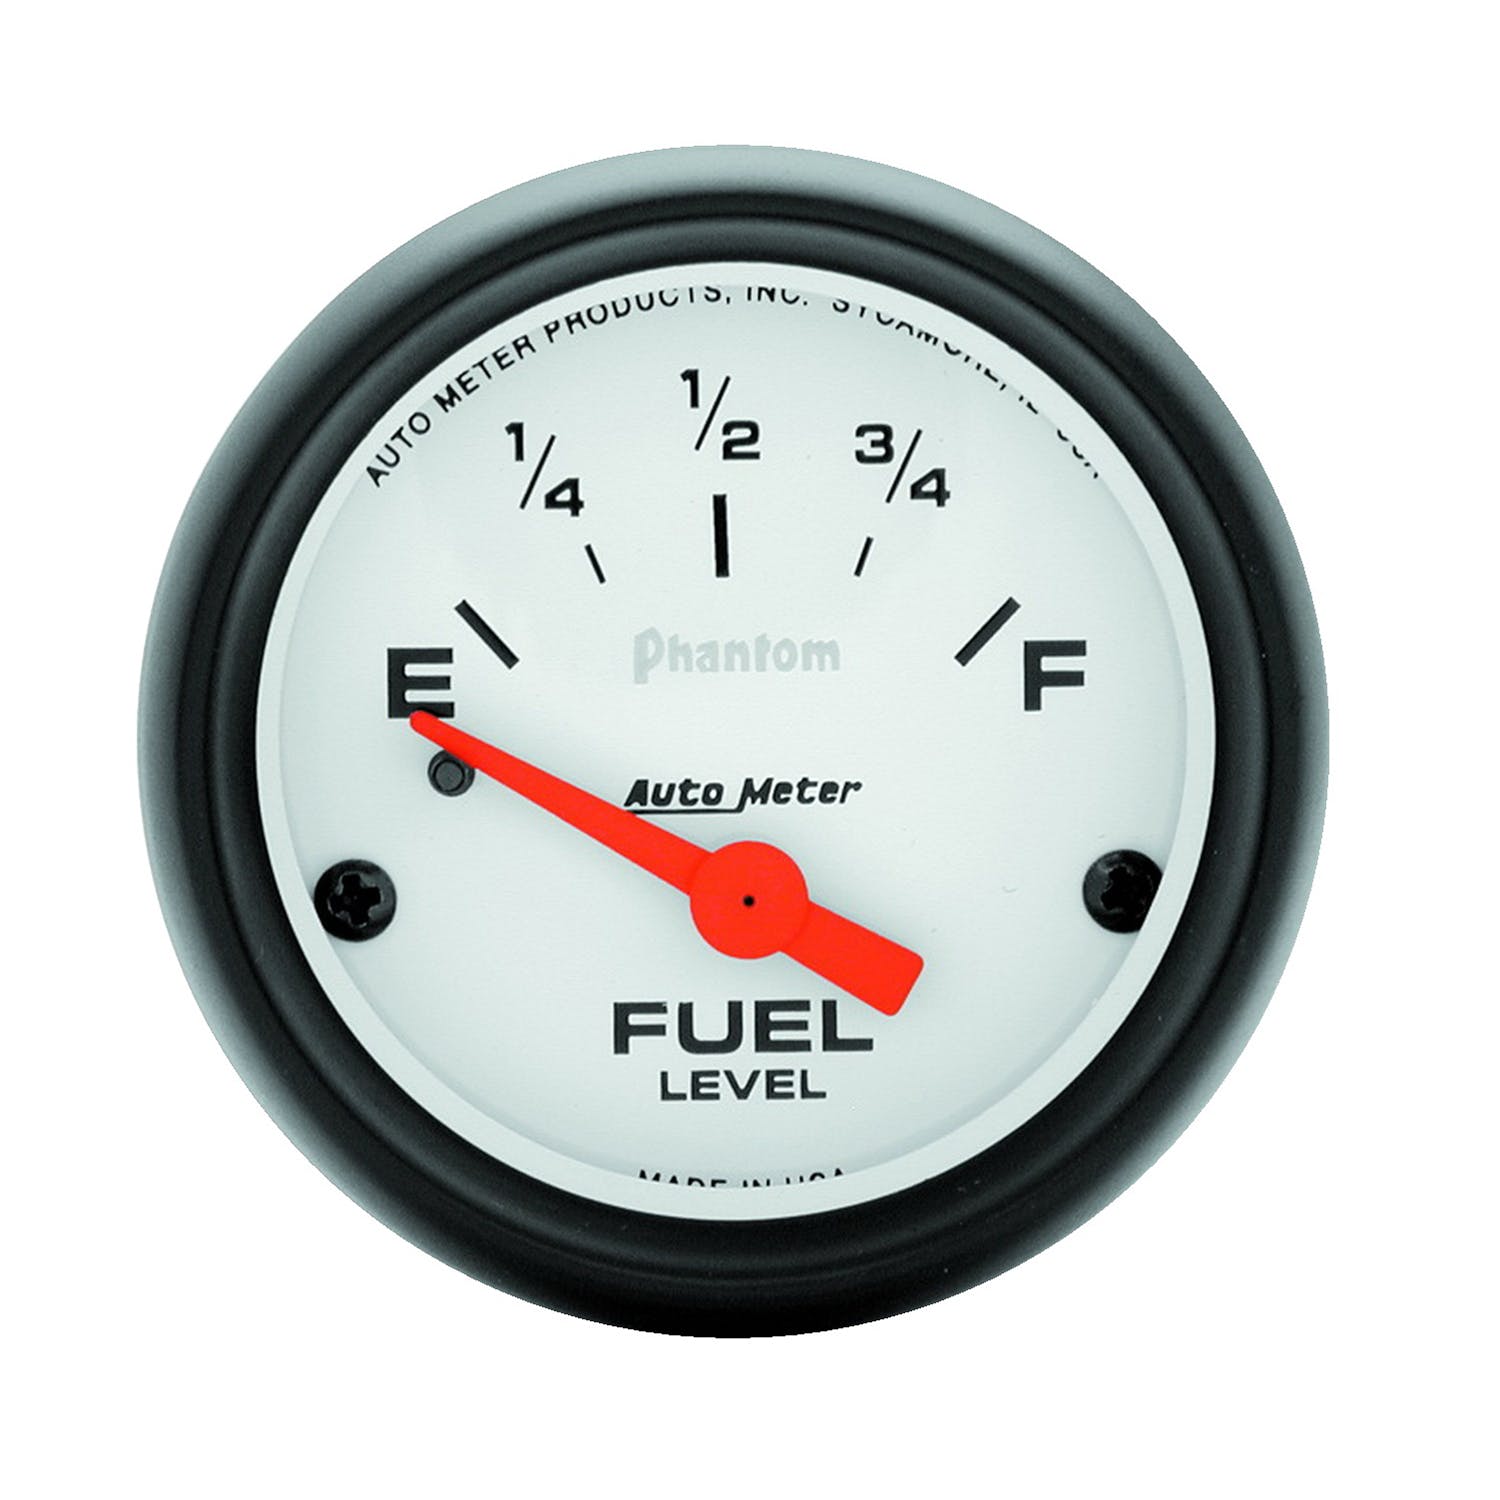 AutoMeter Products 5717 Fuel Level Gauge 0 E/30 F